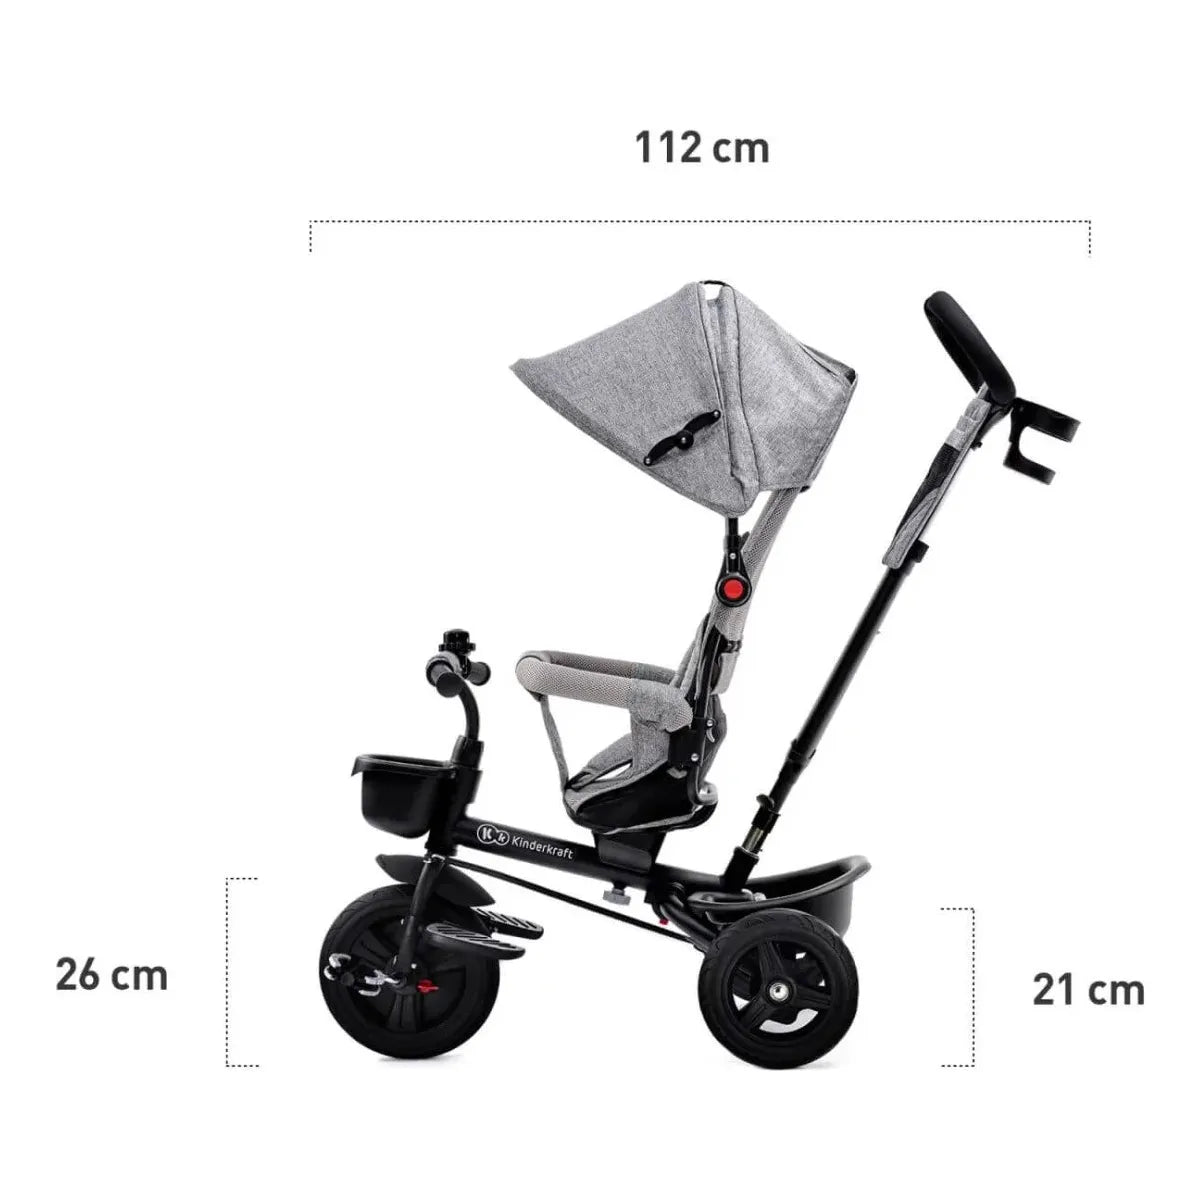 Kinderkraft Aveo Tricycle - Grey dimensions